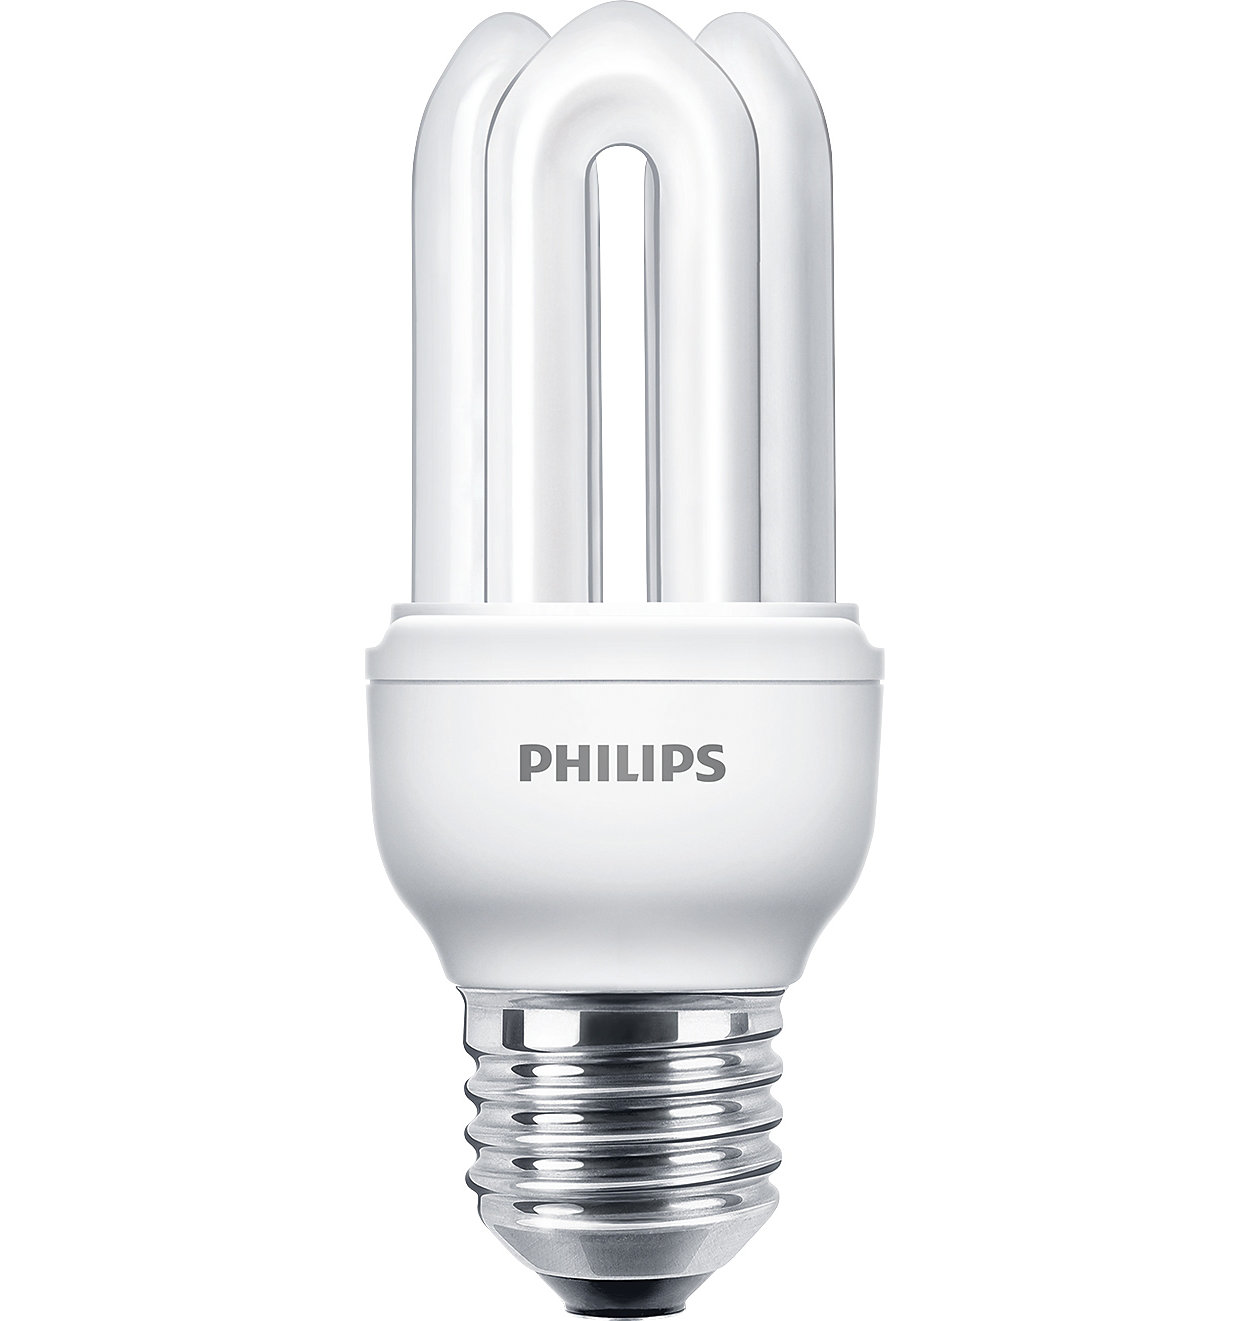 10 Year 3 X Philips 11w Genie Energy Saving Light Bulb BC/B22/Bayonet Cap 